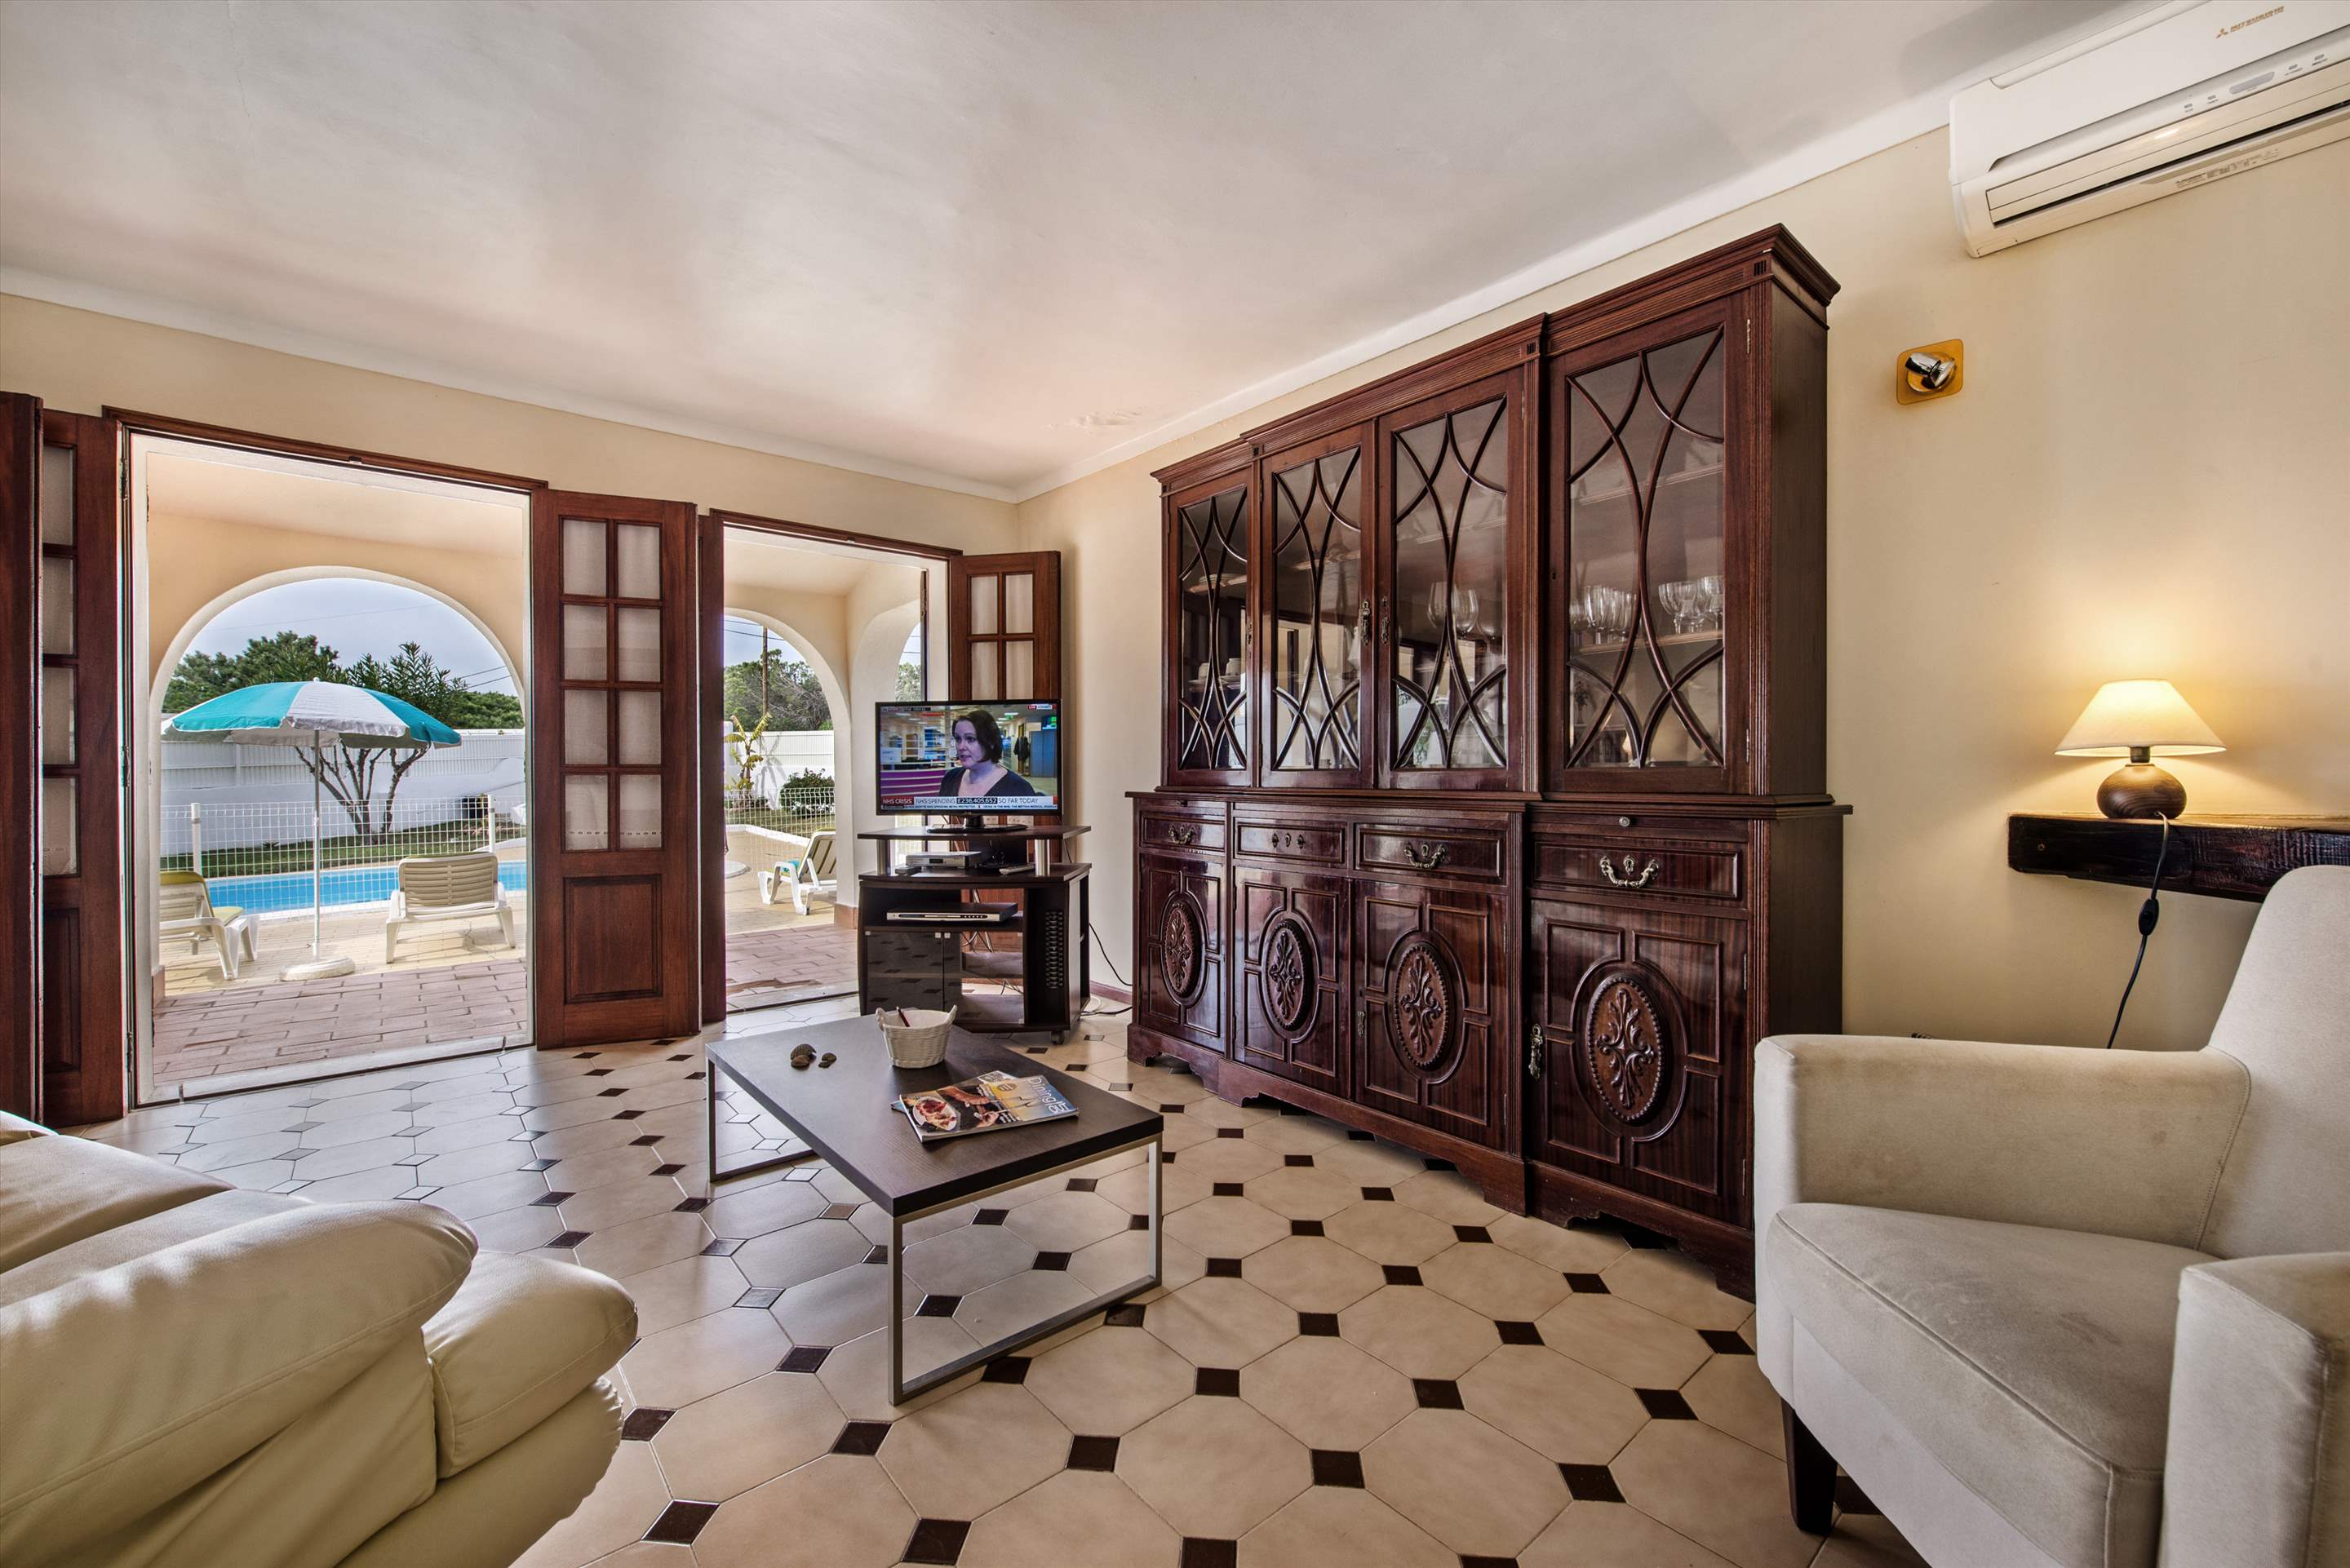 Casa Isabel, 3 bedroom villa in Gale, Vale da Parra and Guia, Algarve Photo #3